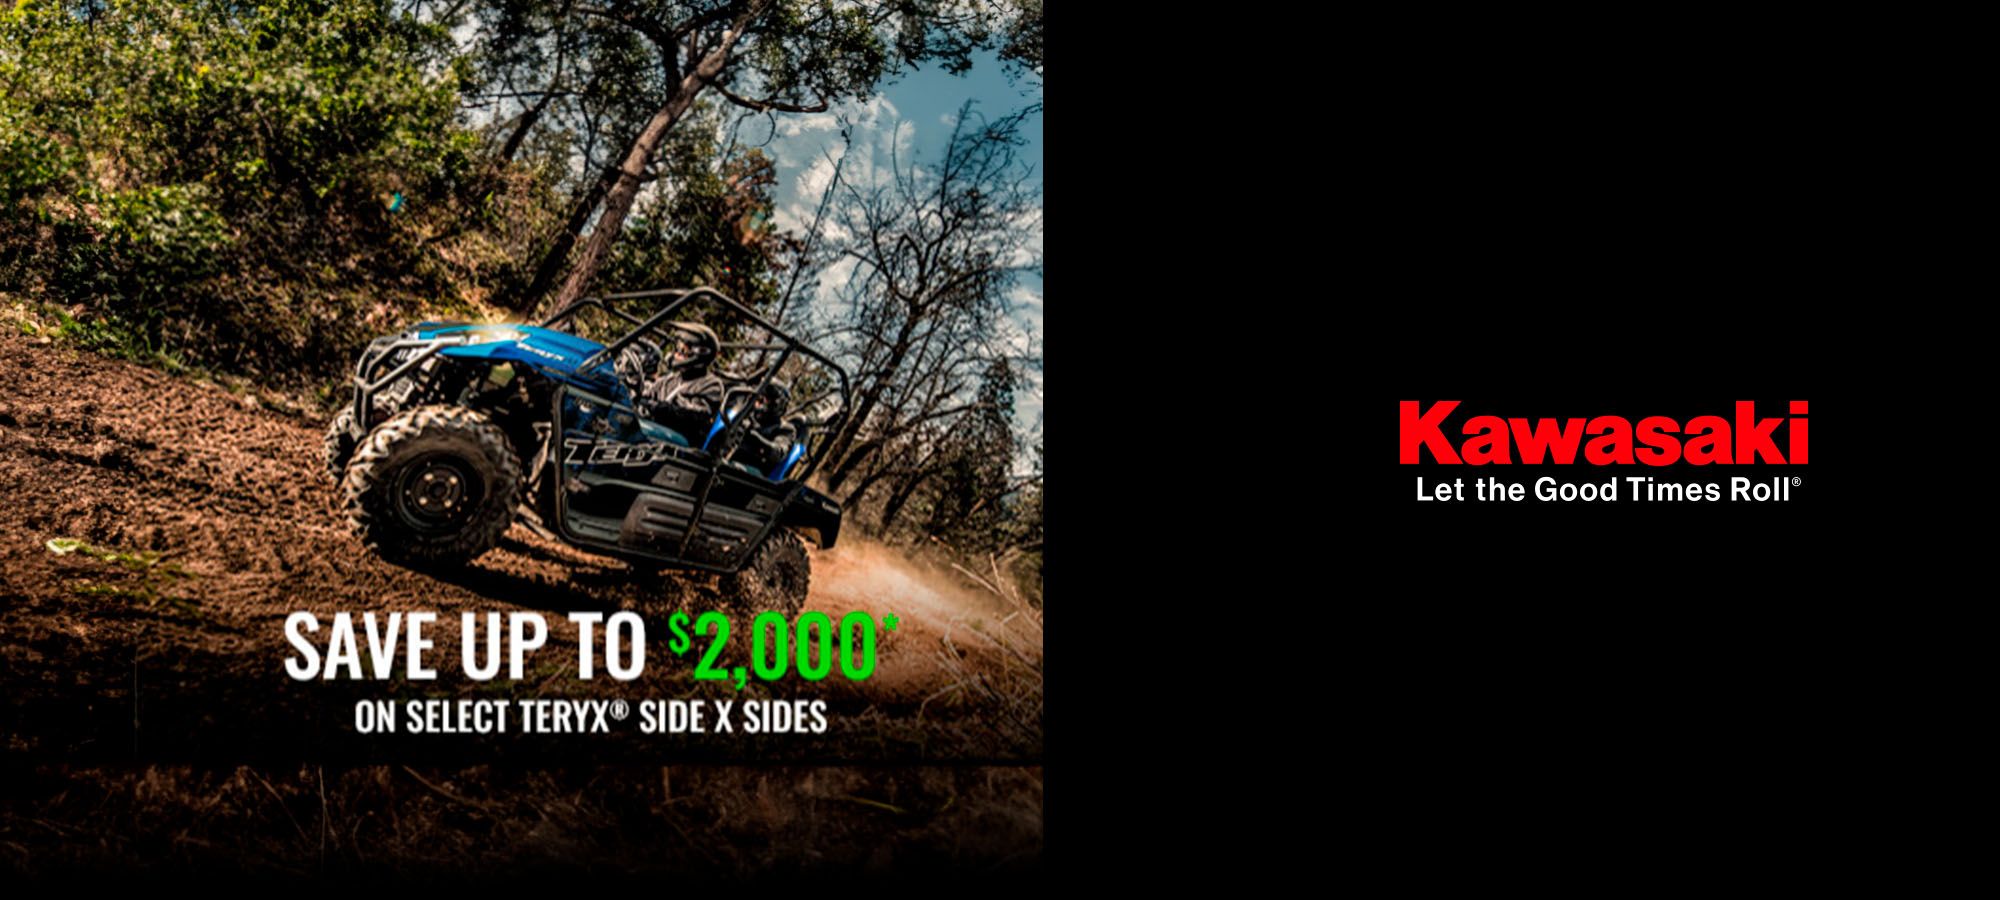 Kawasaki US - Save Up to $2,000* On Select Side X Sides at ATVs and More